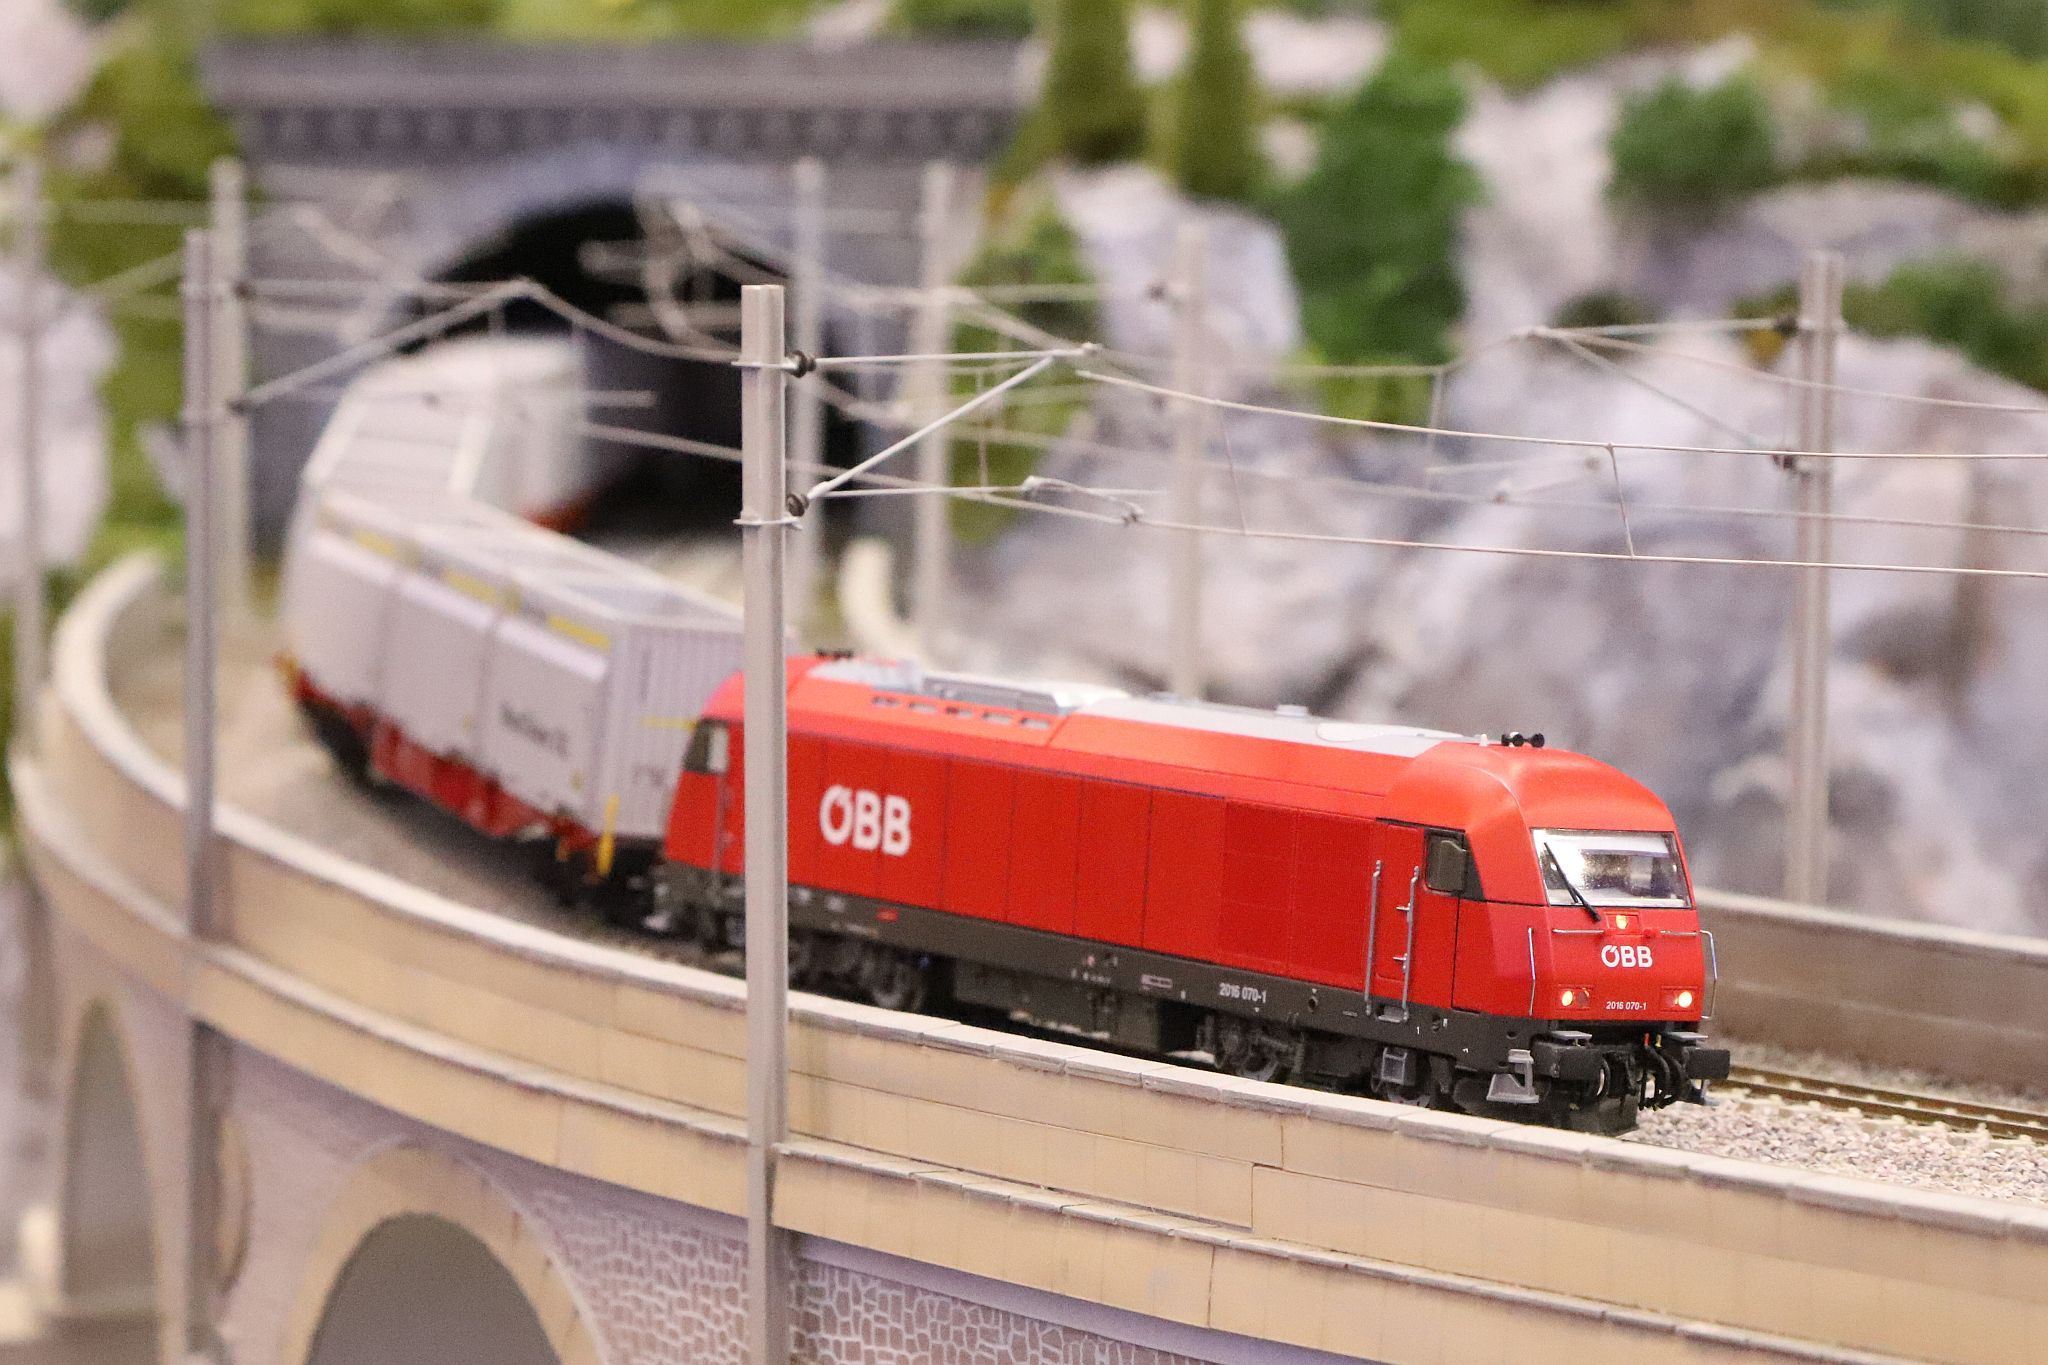 WolfstattHO Gauge model railway layout. 2023 London Festival of Railway Modelling, Alexandra Palace, London